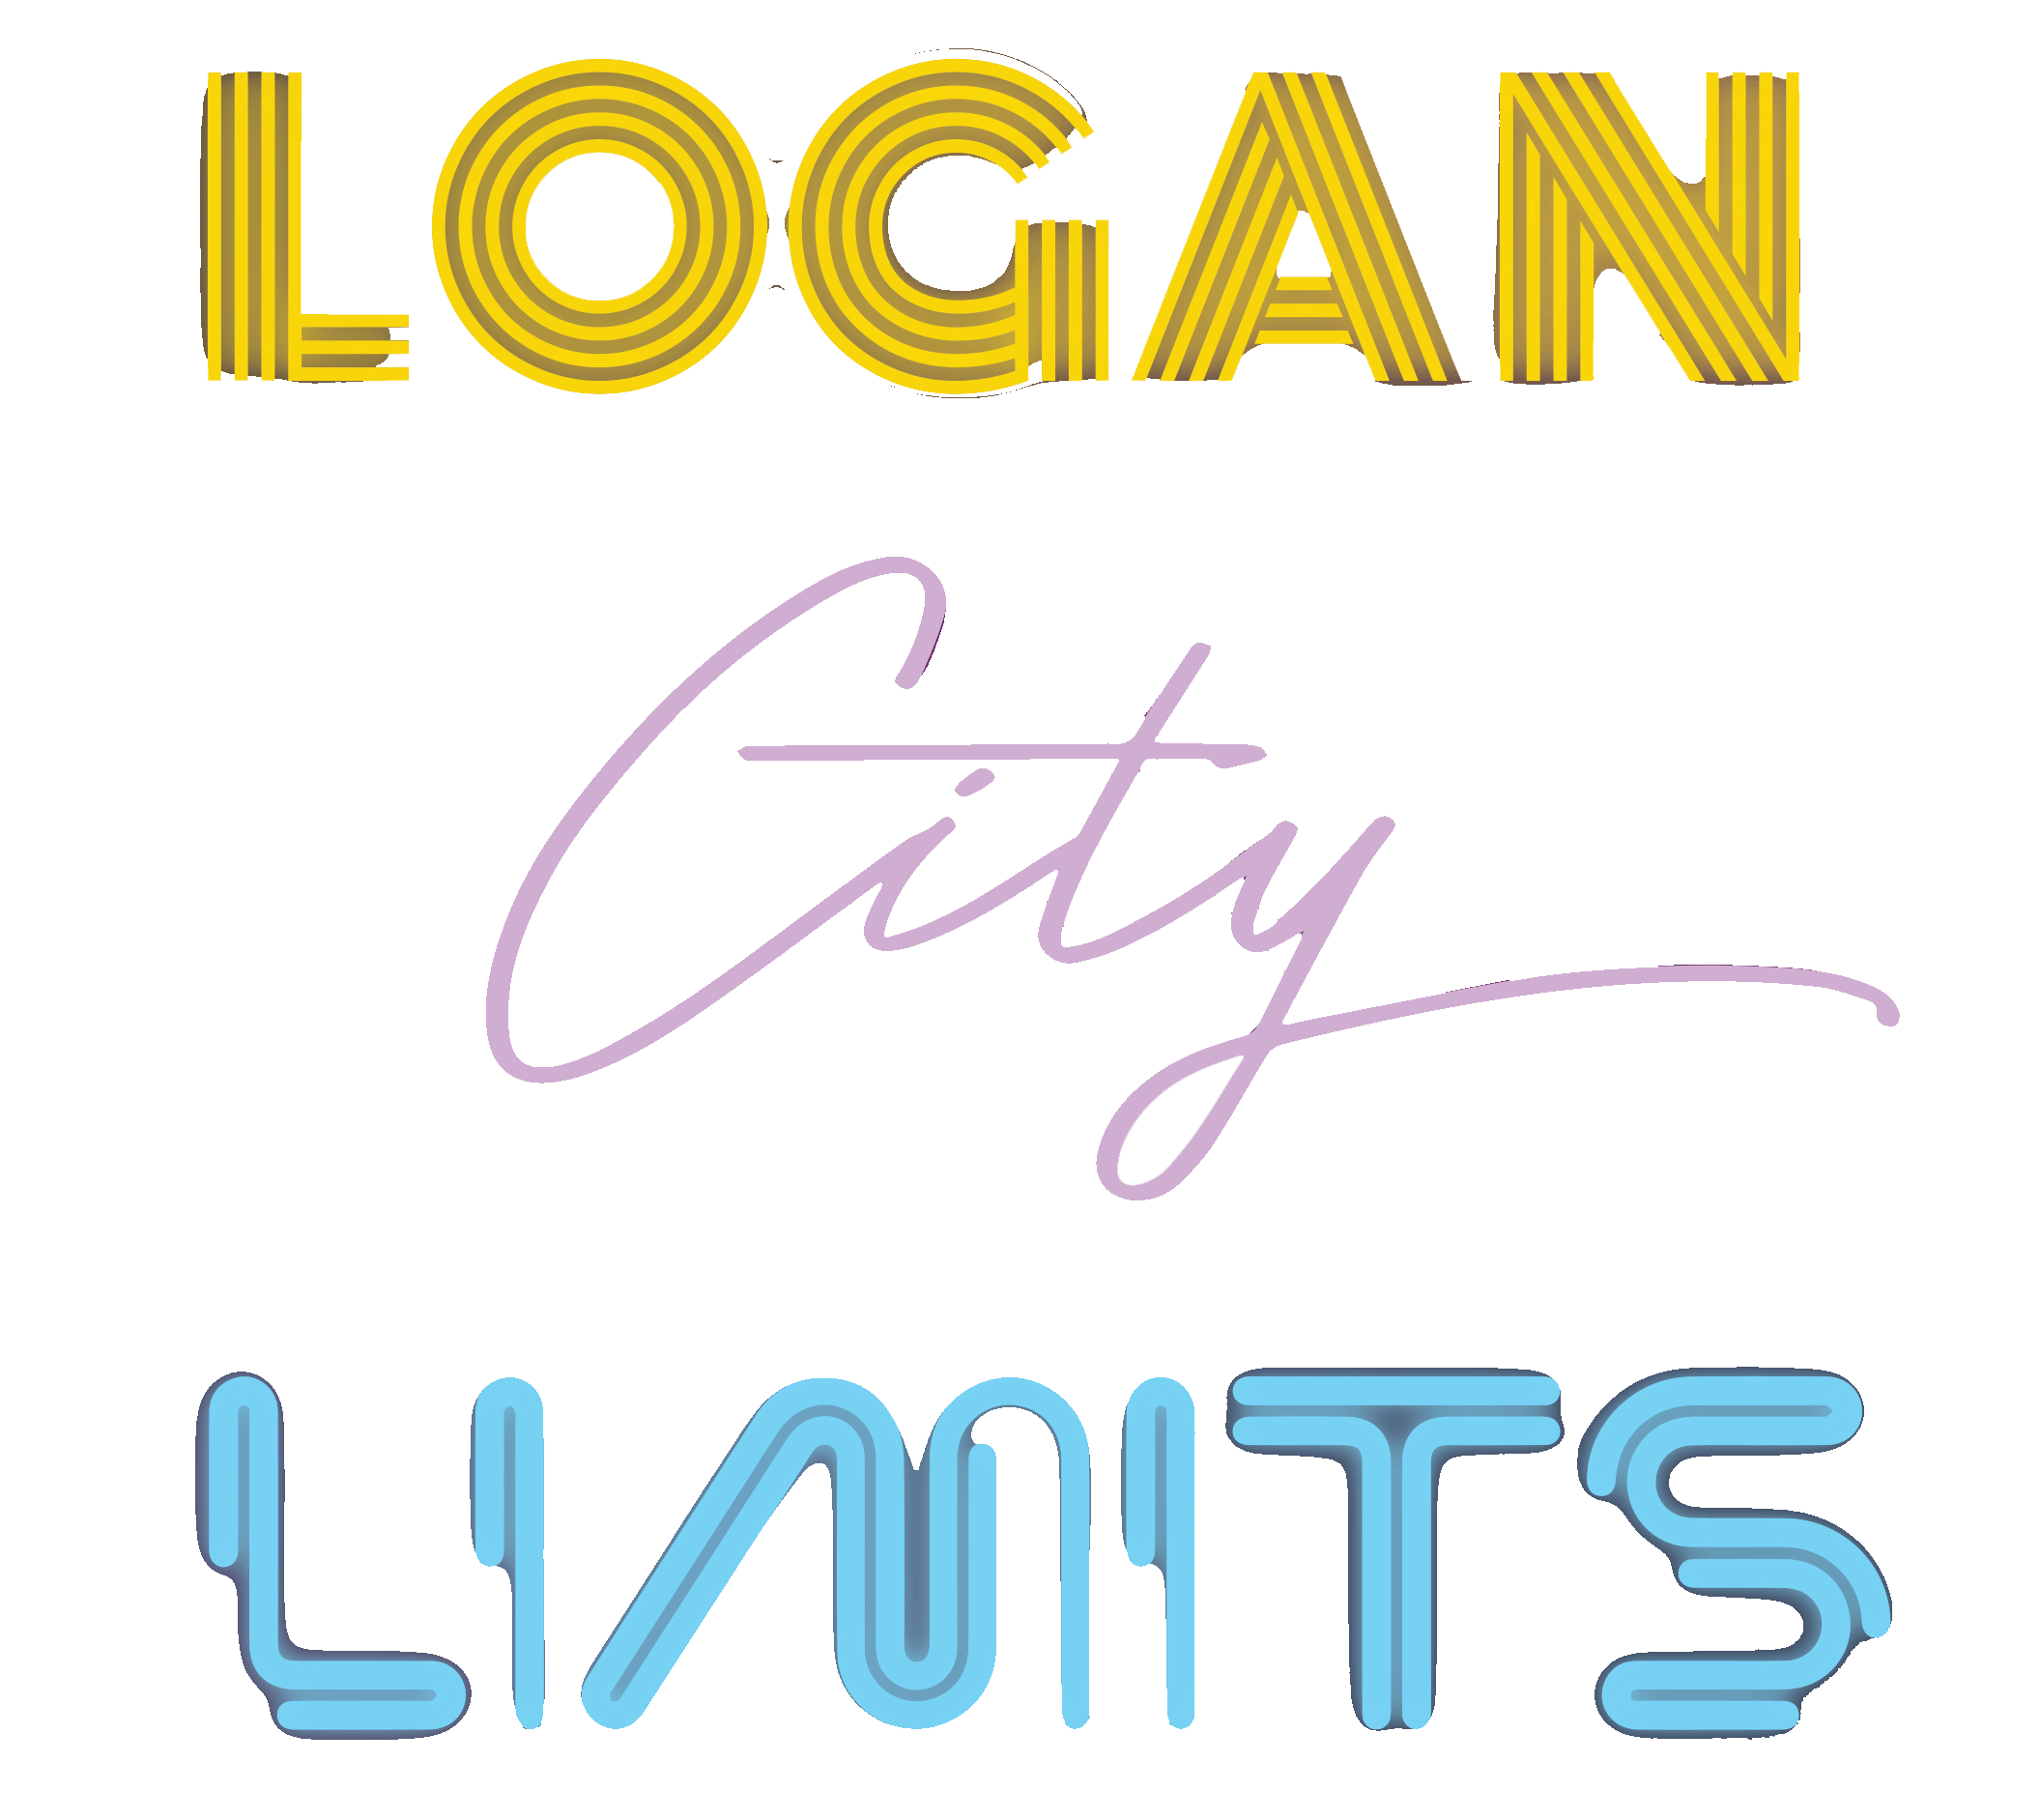 Logan City Limits - Music, Film, Art